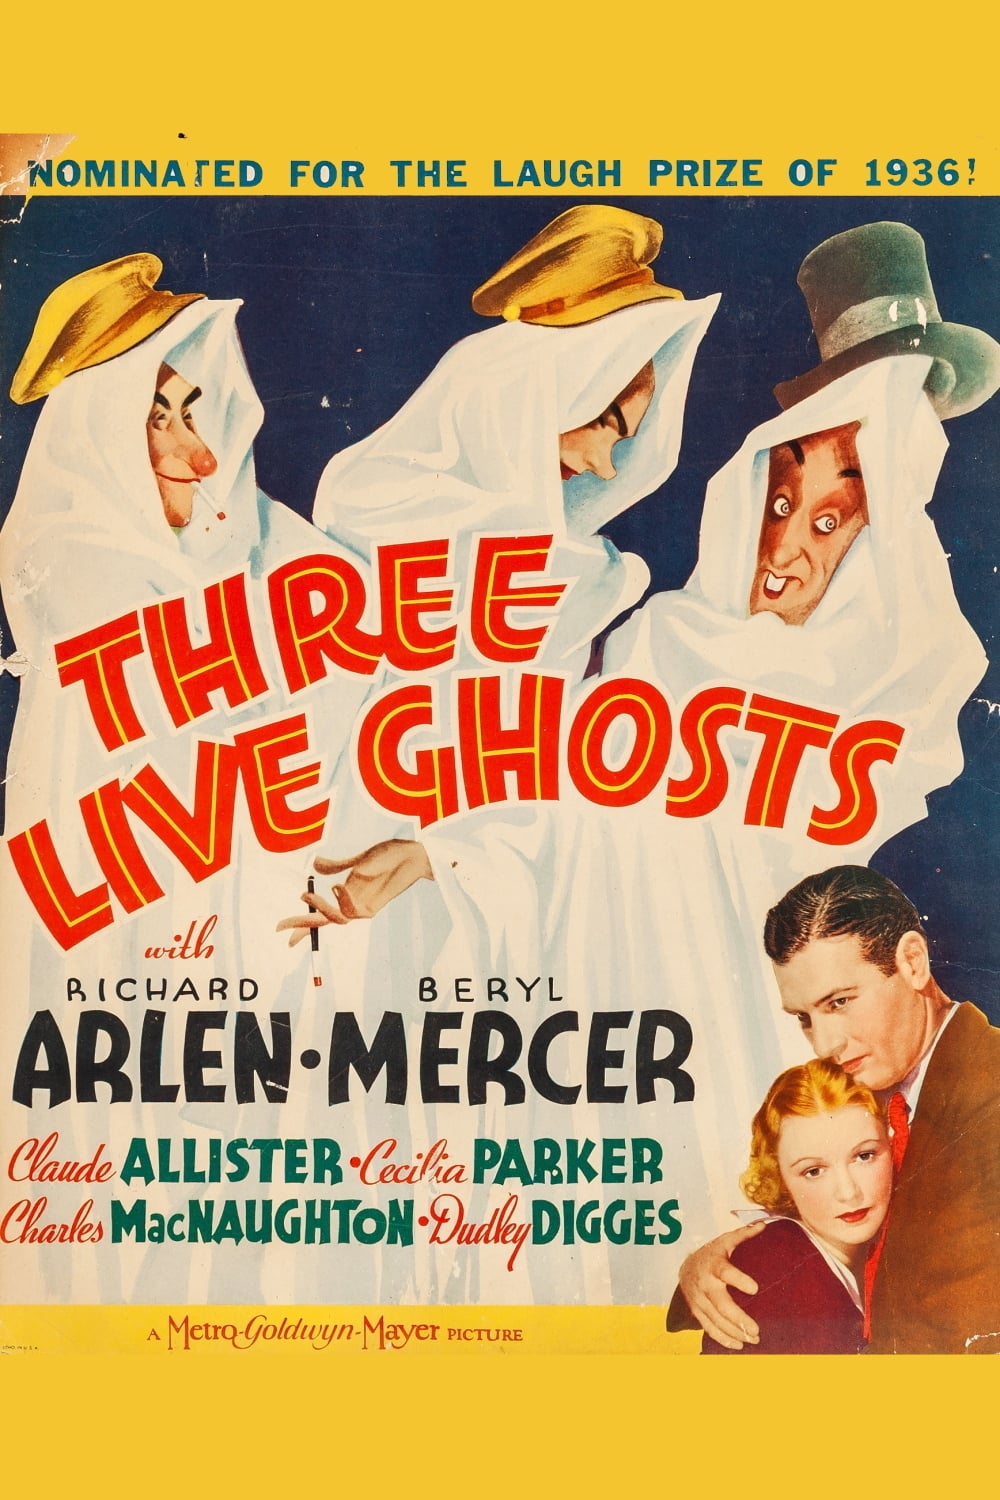 Three Live Ghosts